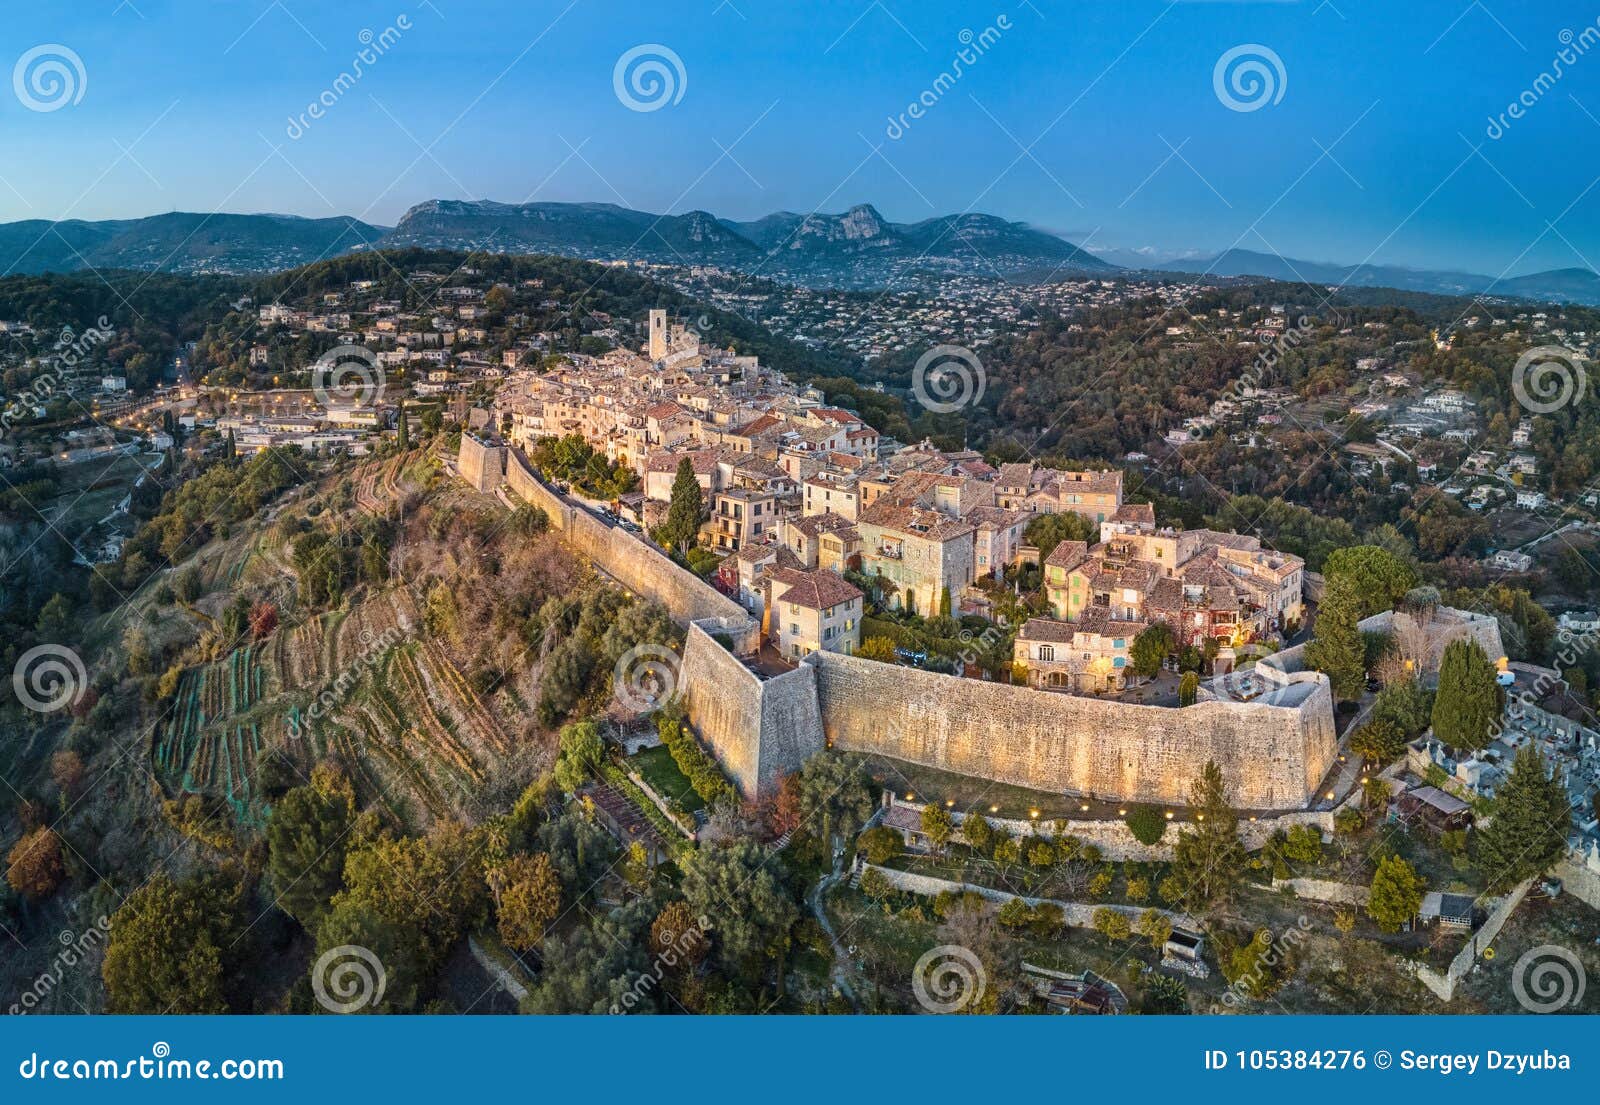 aerial view on saint paul de vence fortified village, france